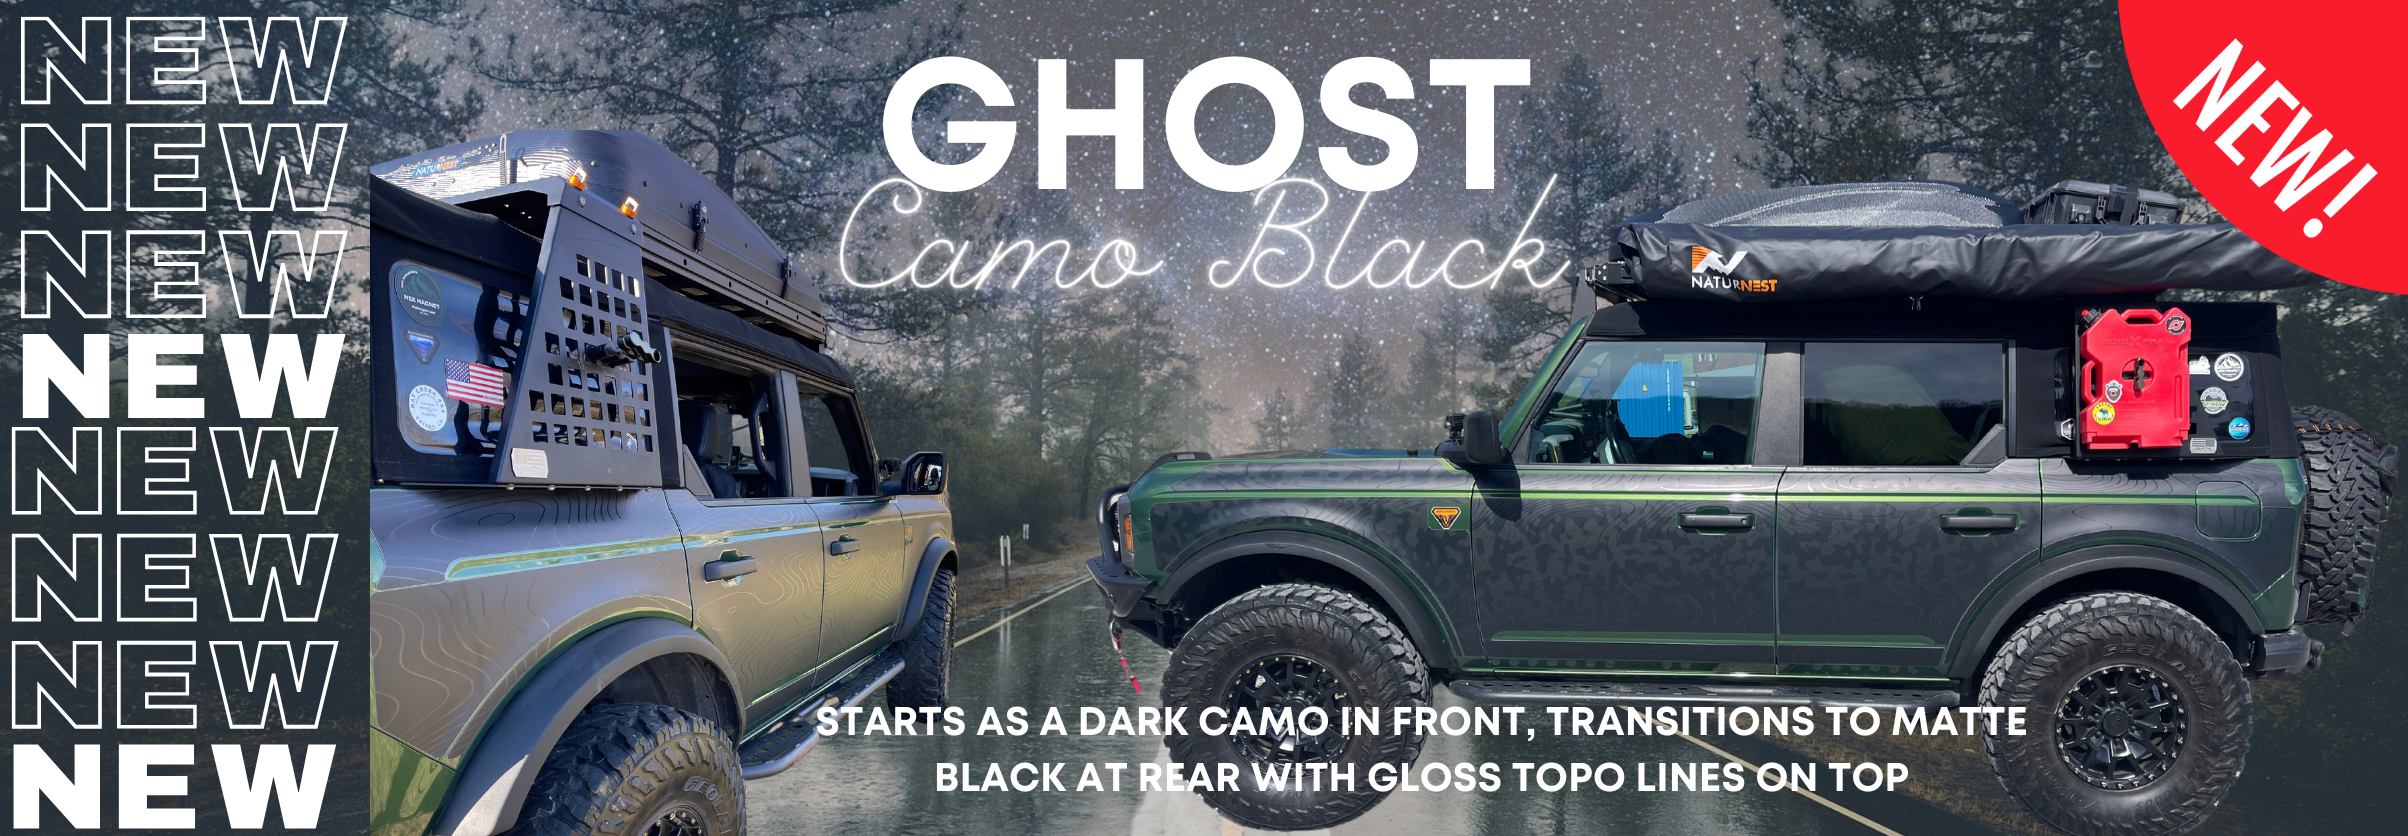 Ghost Camo design MEK Magnet Removable Trail Armor